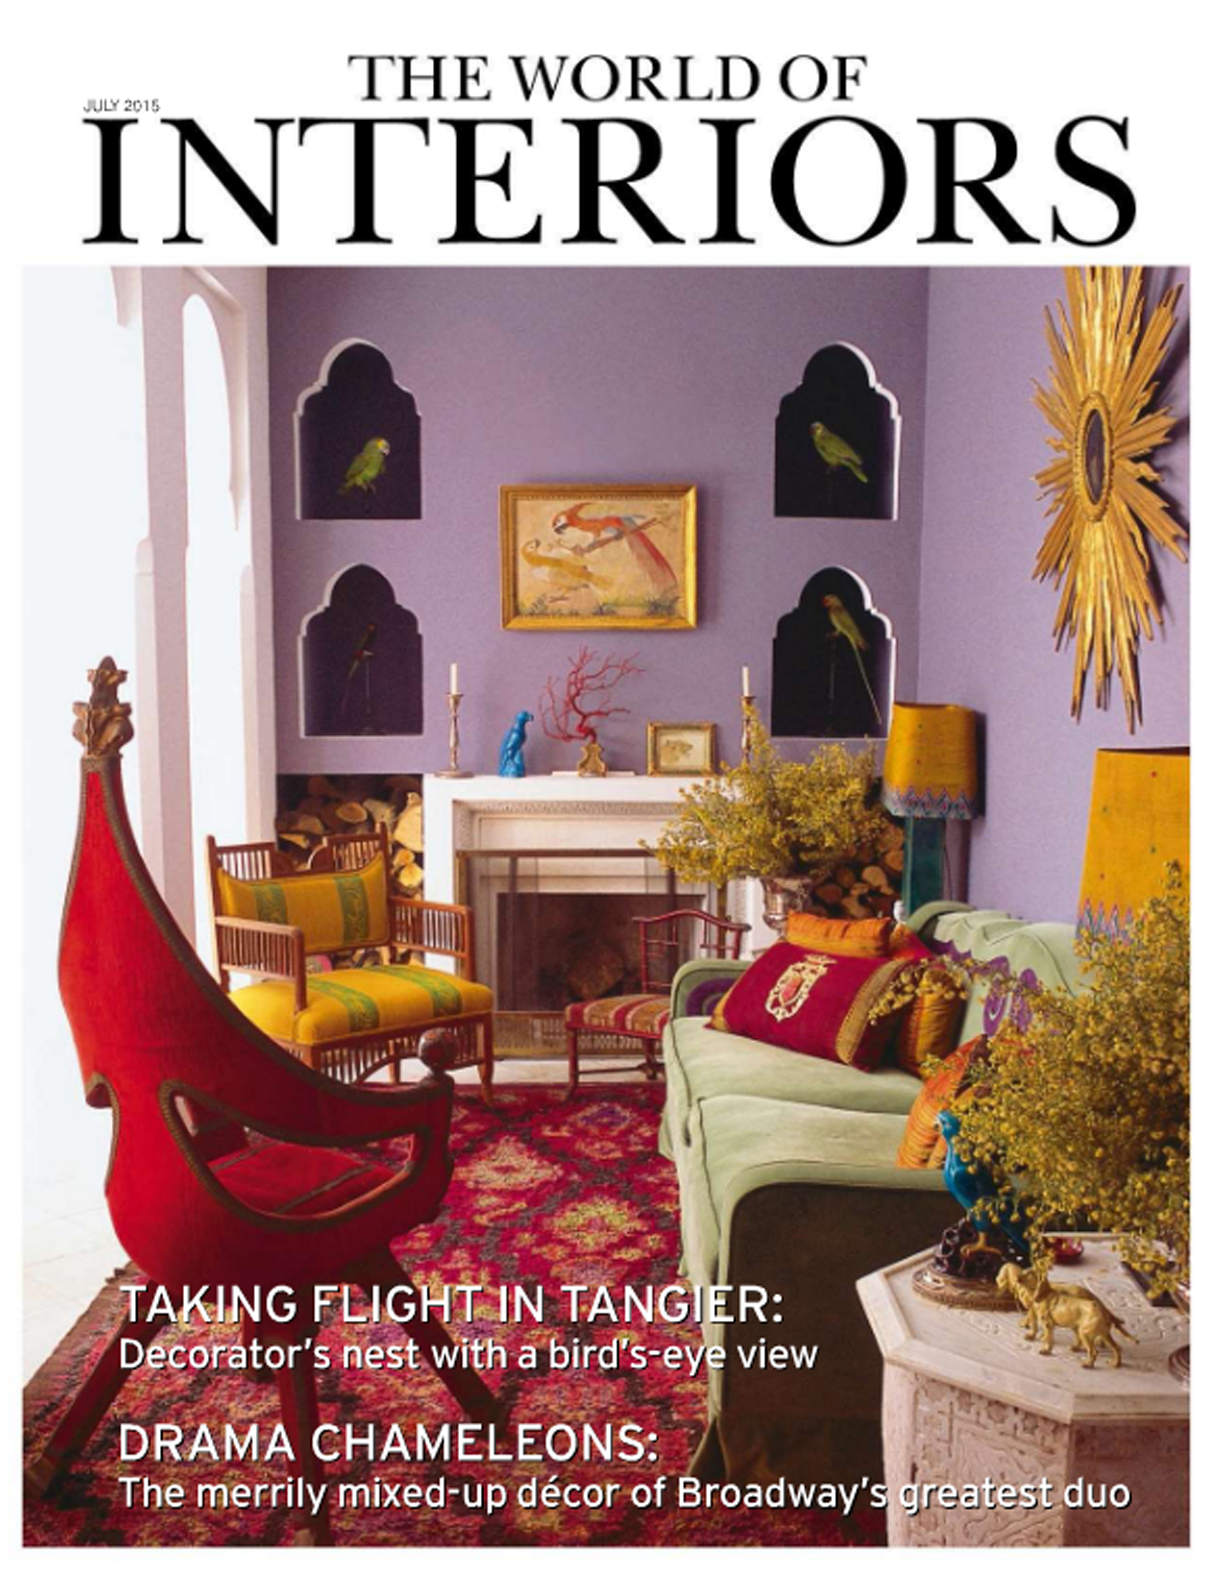 World of interiors magazine Kingham bespoke kitchen design feature July 2015